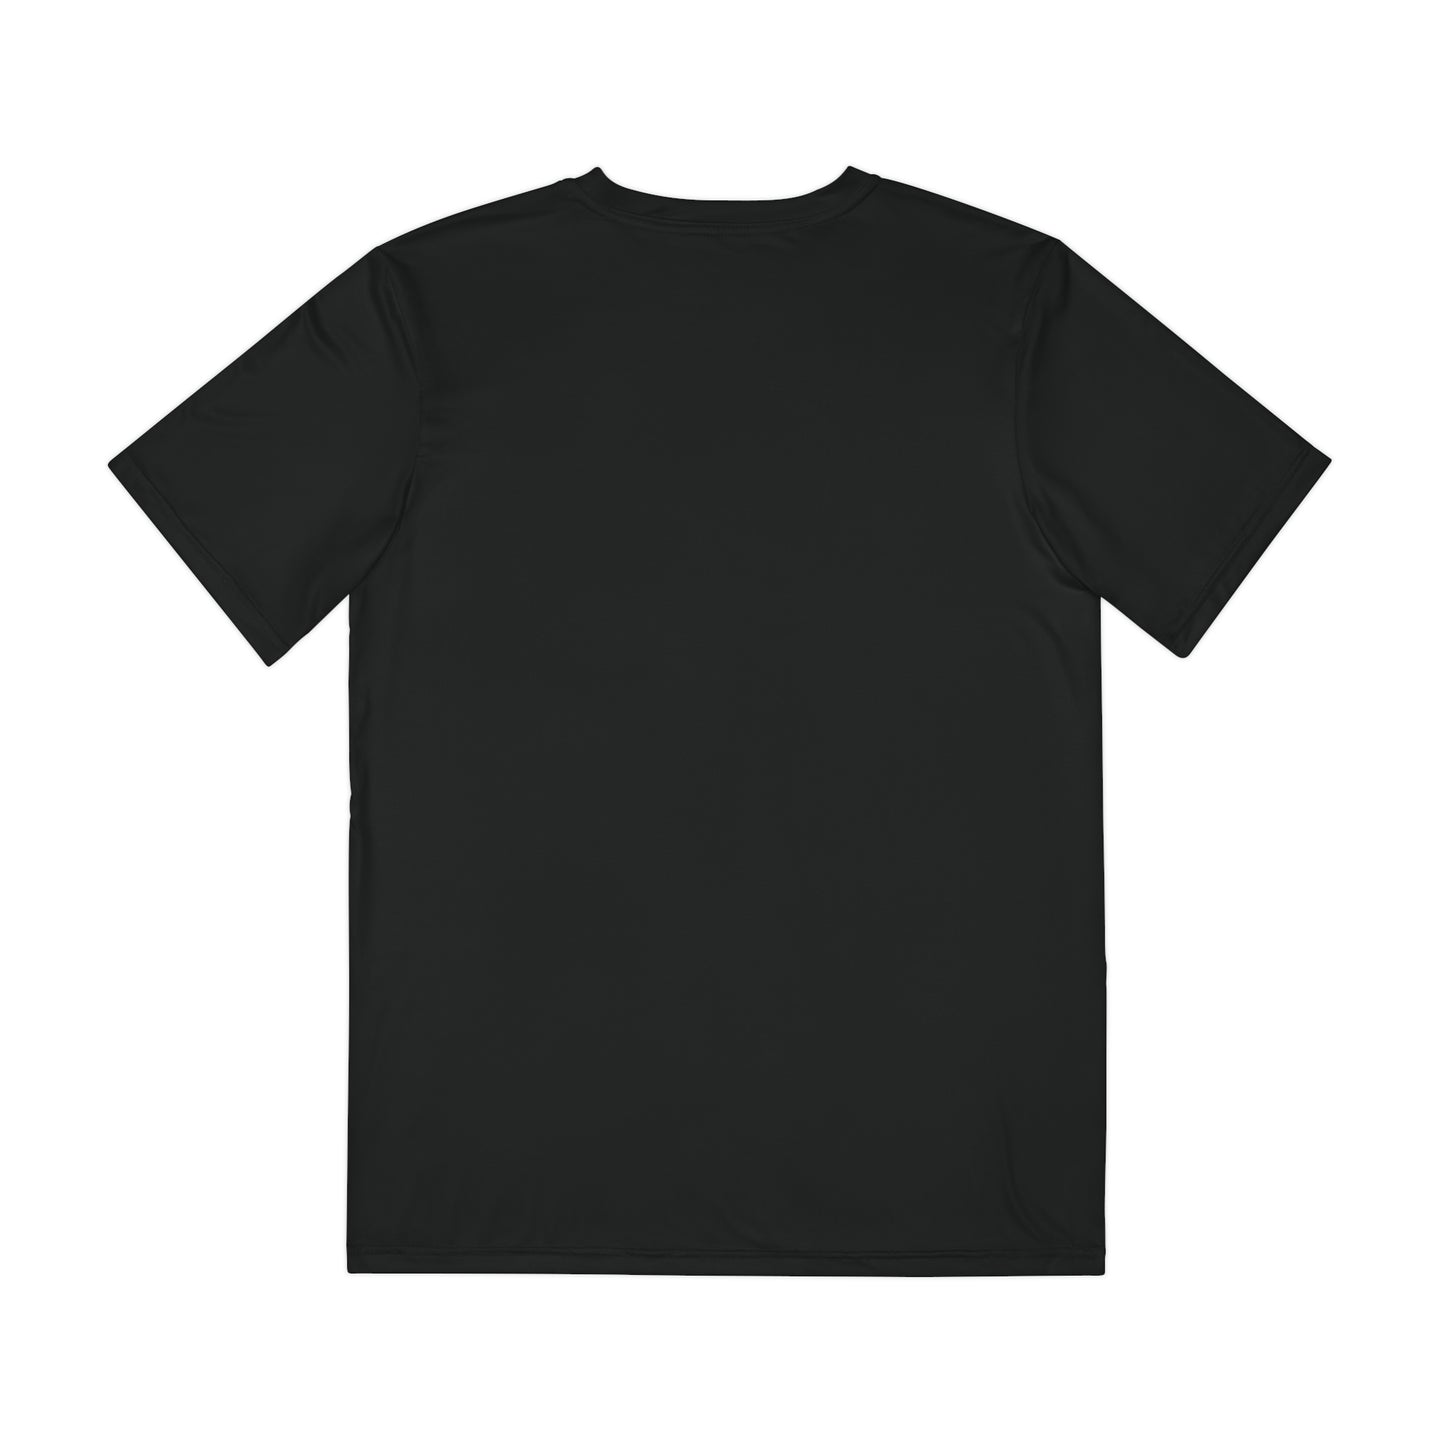 R&RH Journey Black T-shirt